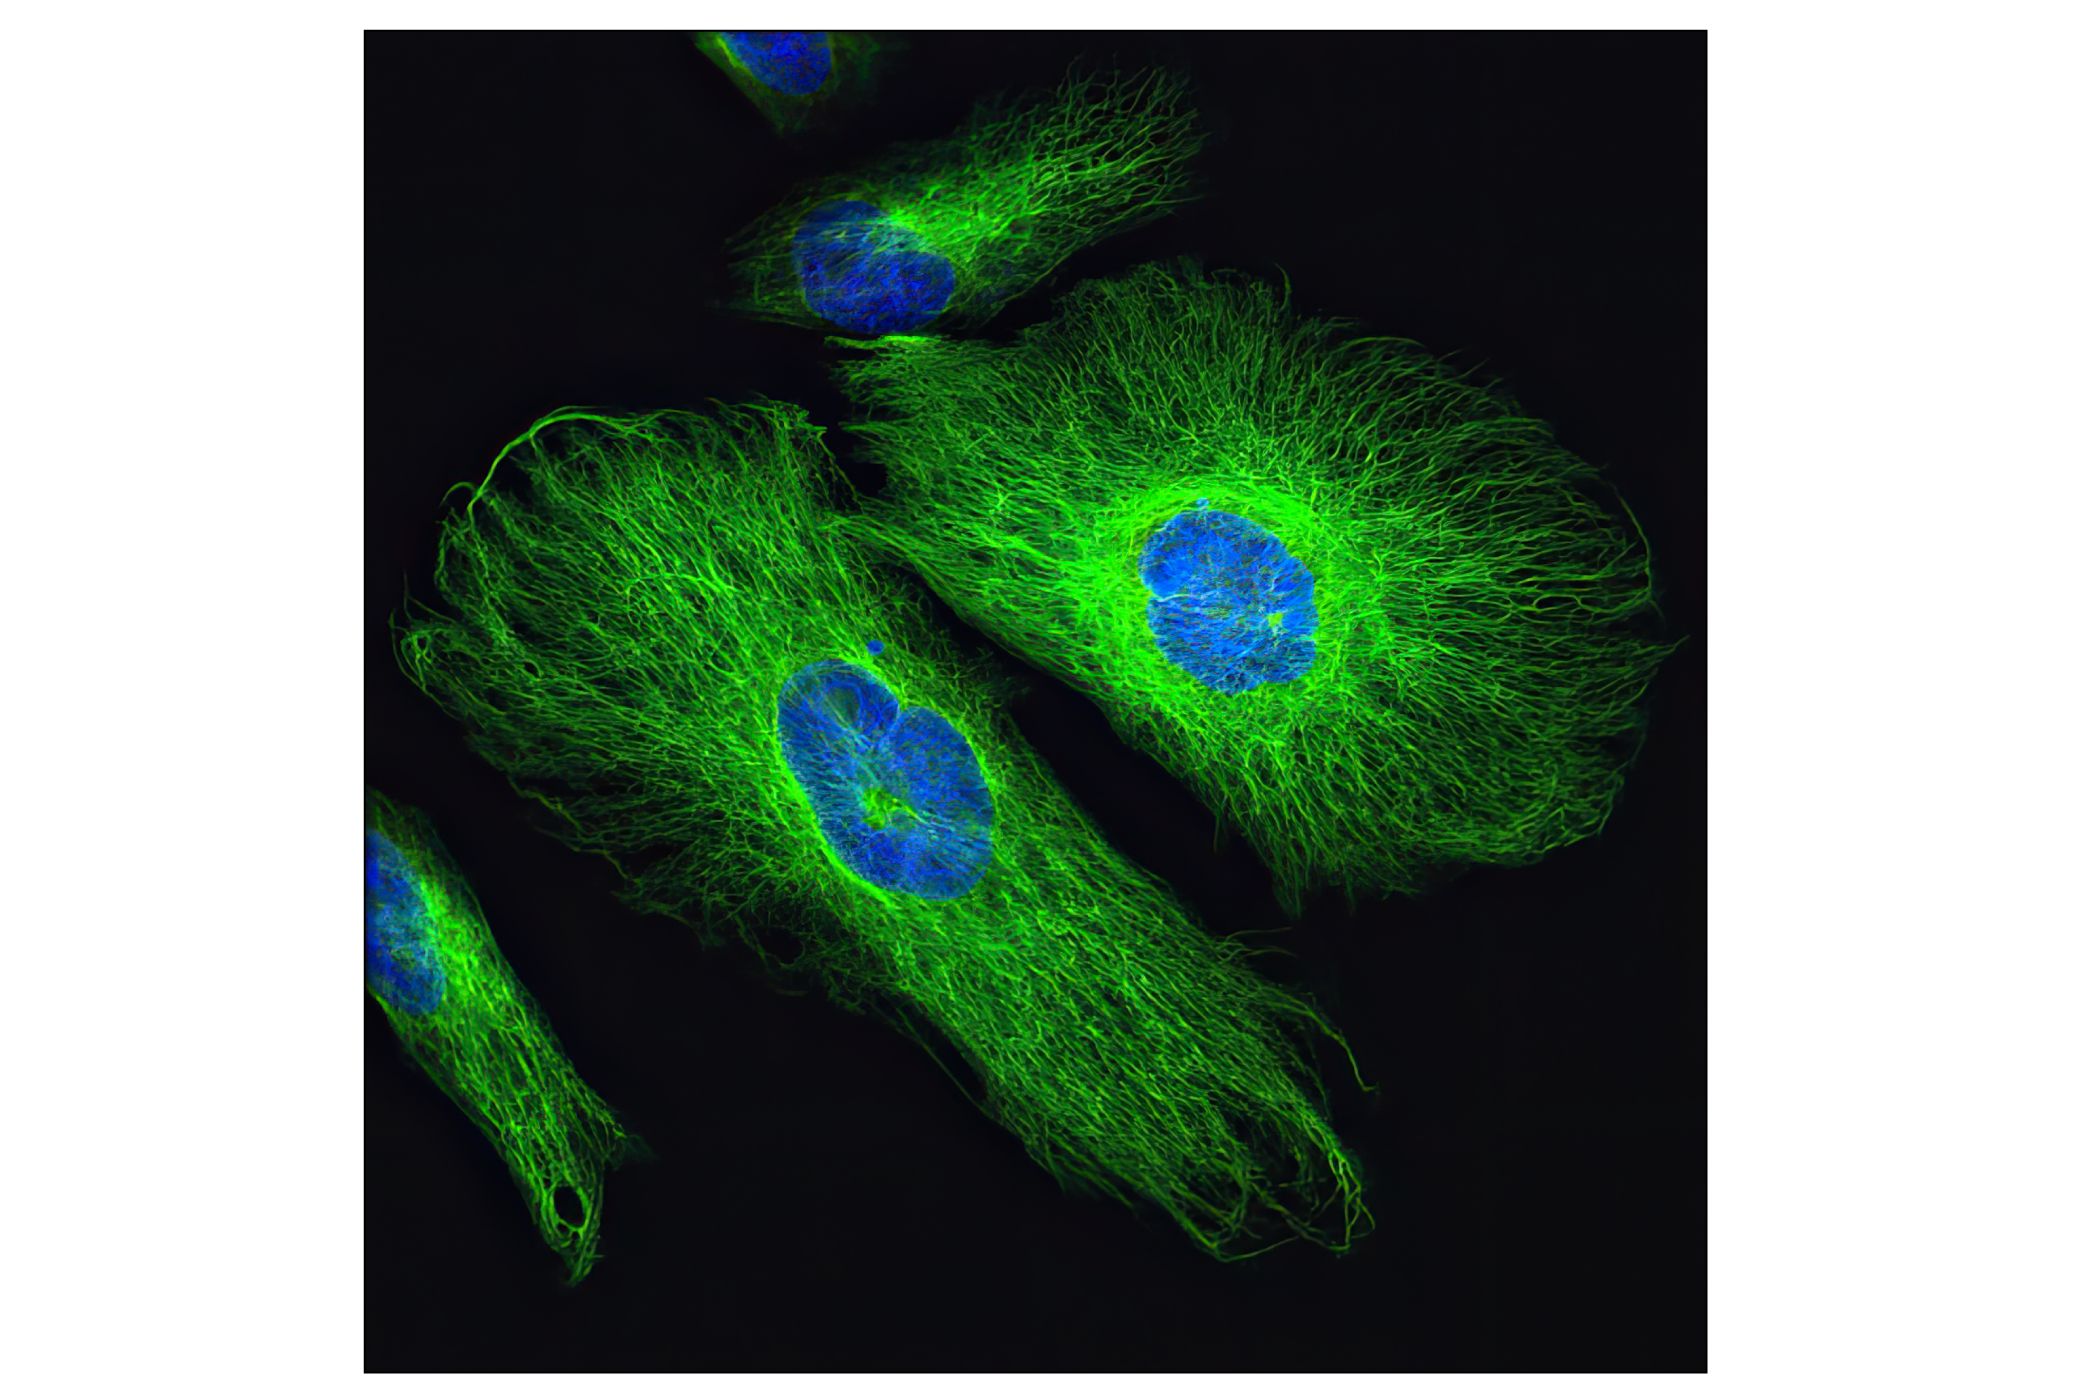  Image 61: Epithelial-Mesenchymal Transition (EMT) Antibody Sampler Kit